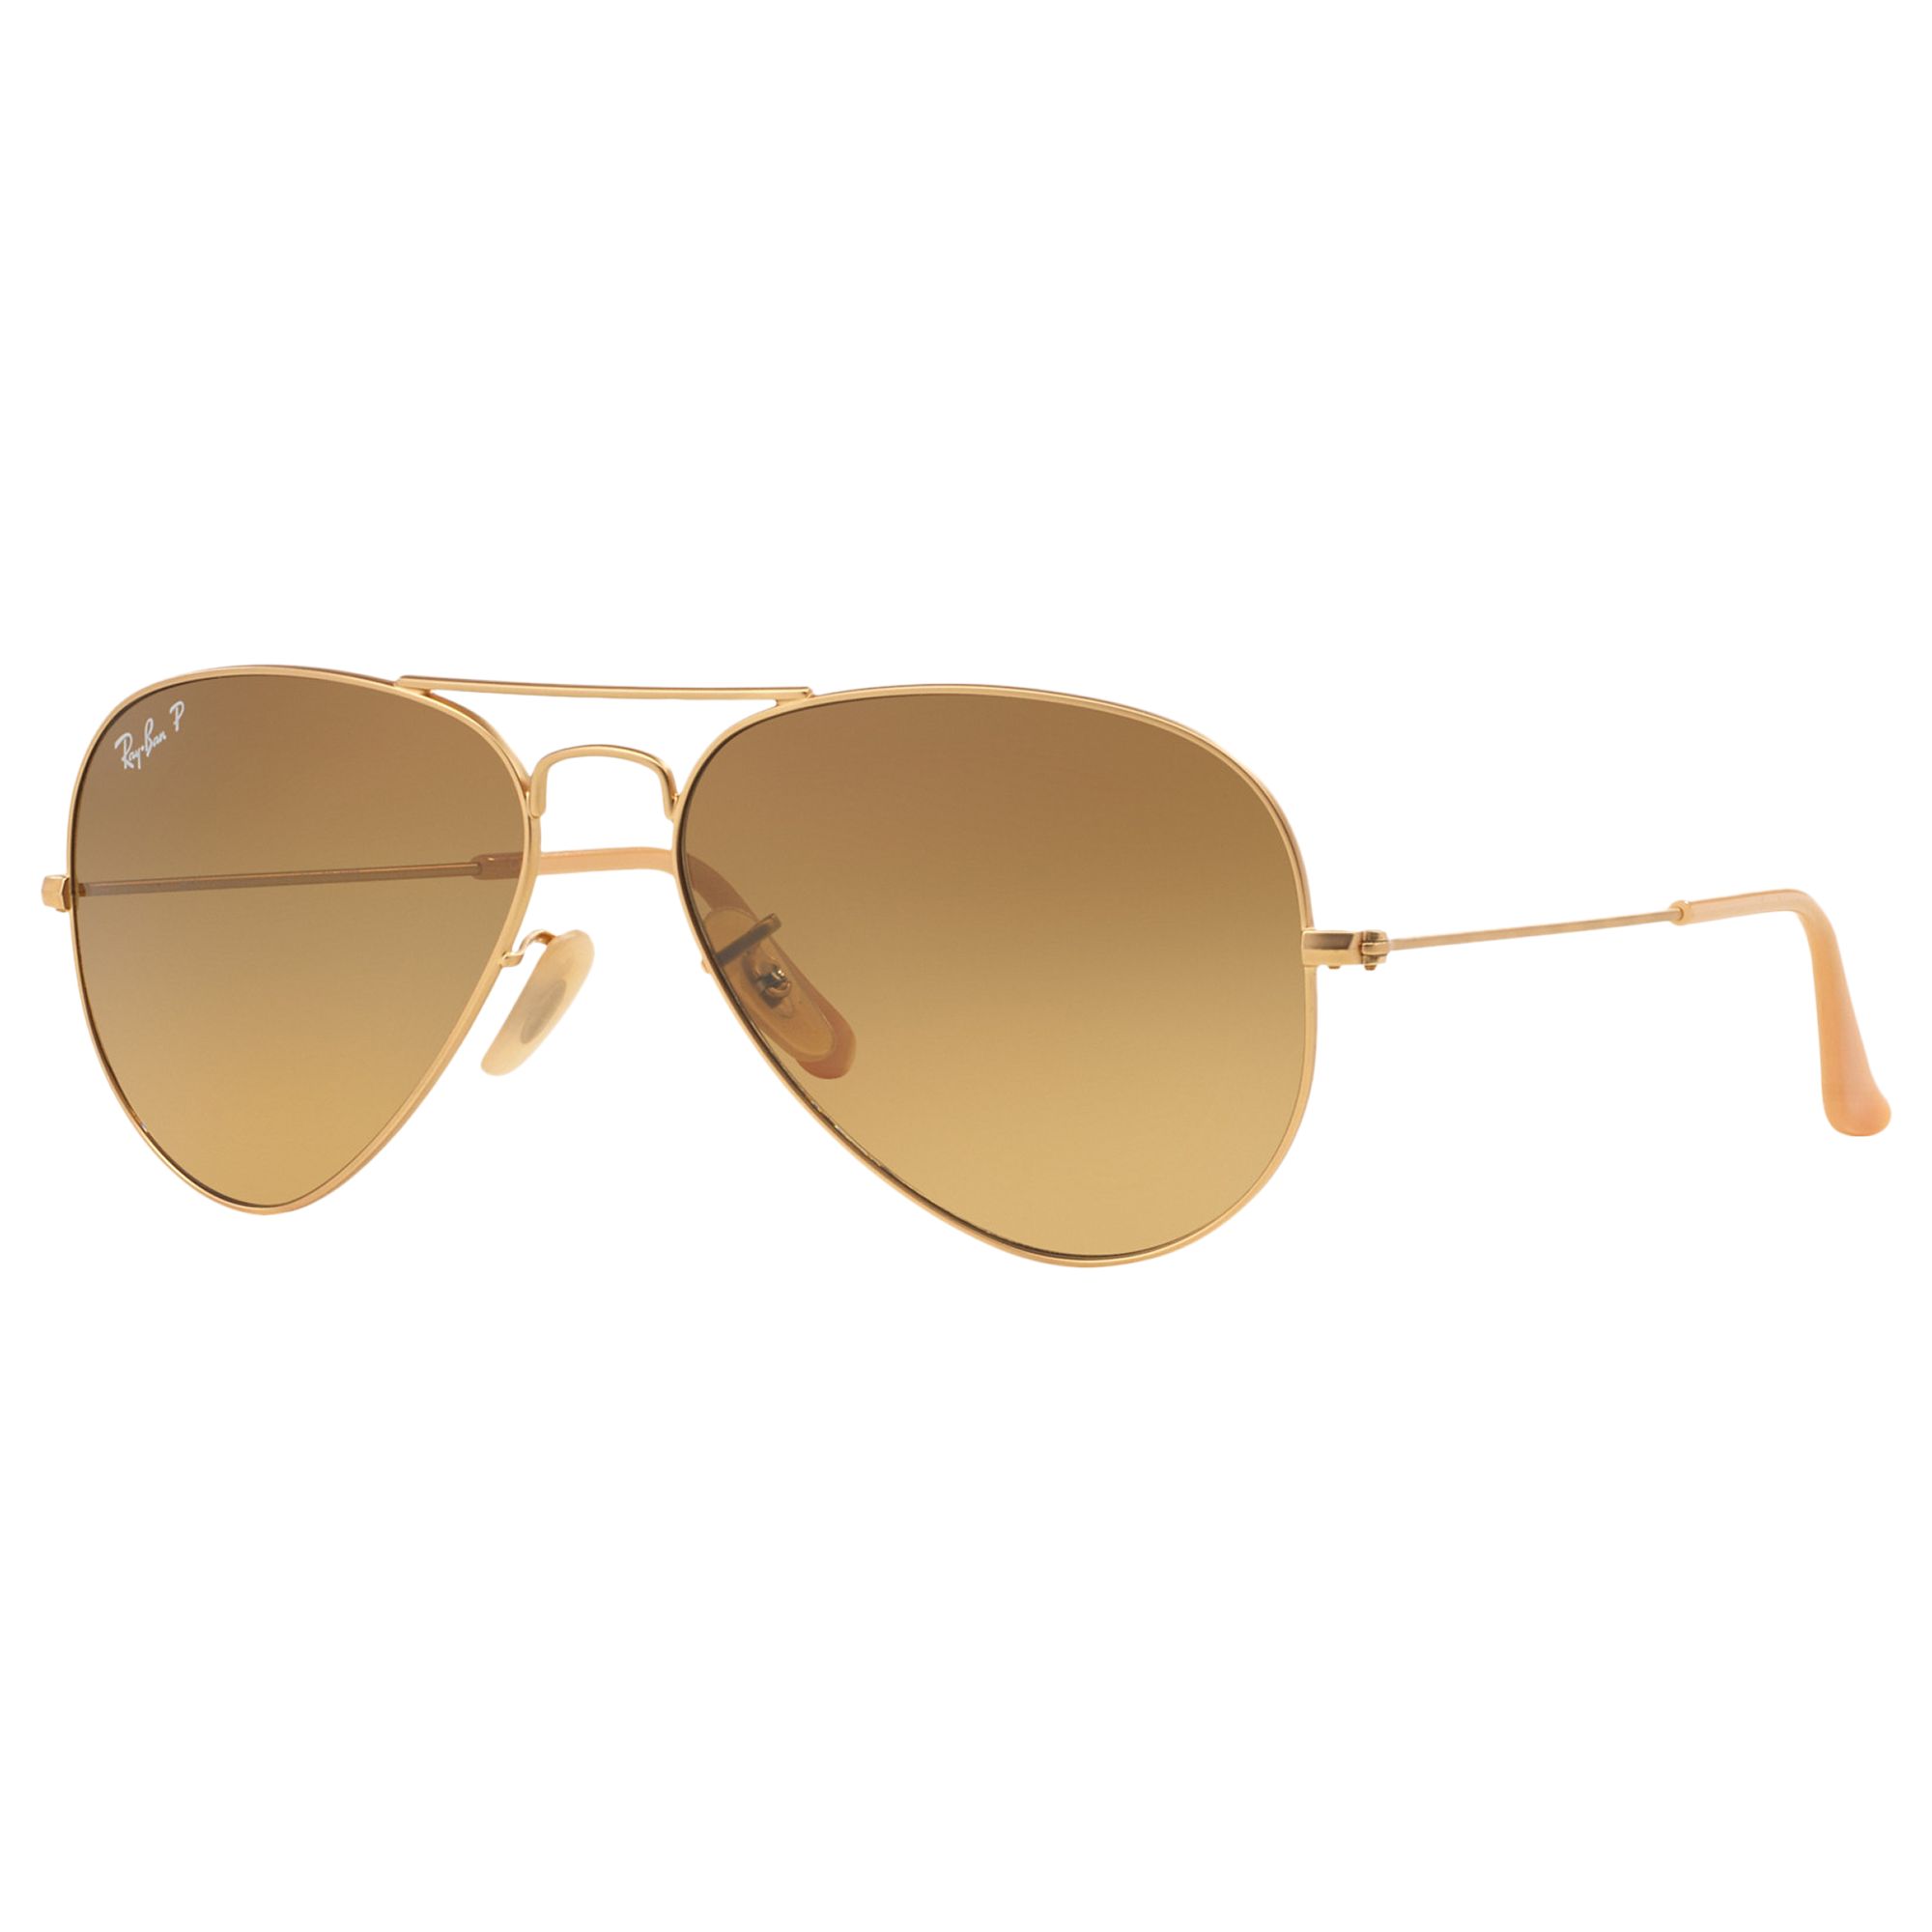 Ray-Ban RB3025 Polarised Original Aviator Sunglasses, Gold/Brown Gradient  at John Lewis & Partners